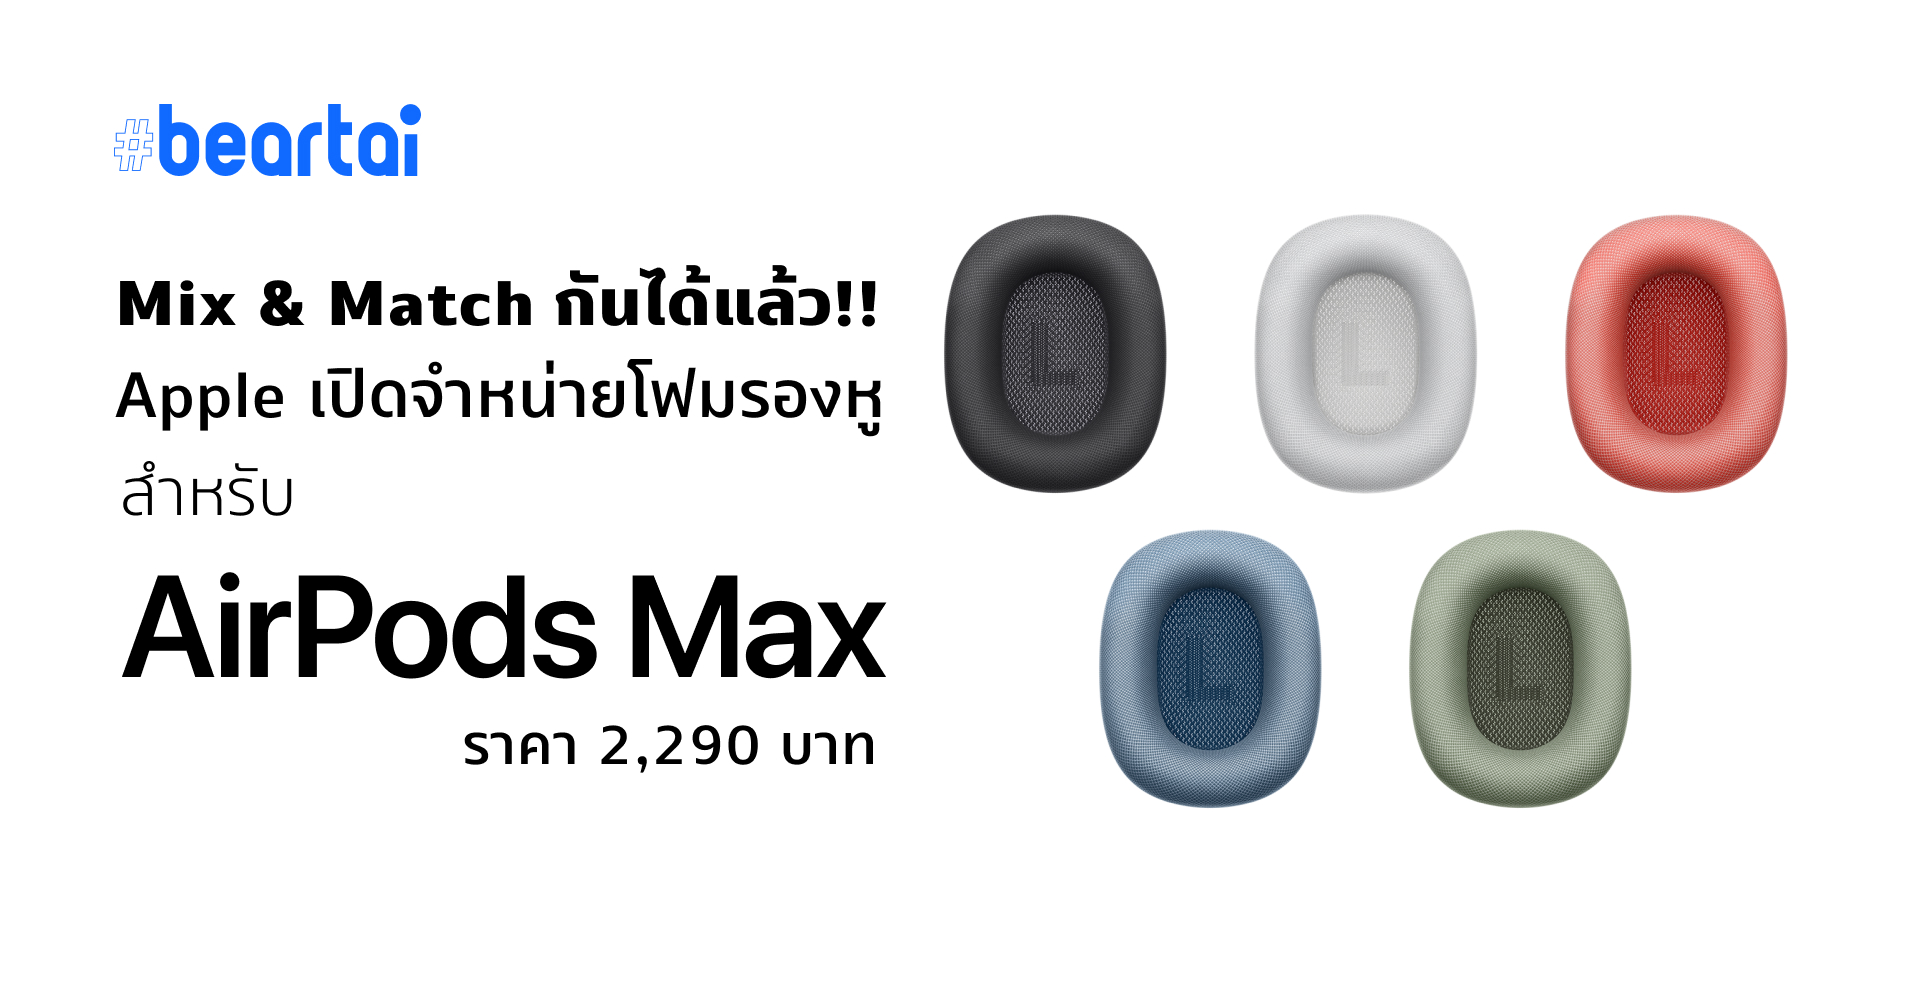 Mix&Match กันได้แล้ว!! Apple ไทยเปิดขายโฟมรองหู AirPods Max แยกแล้ว หลากสีสัน ในราคาคู่ละ 2,290 บาท